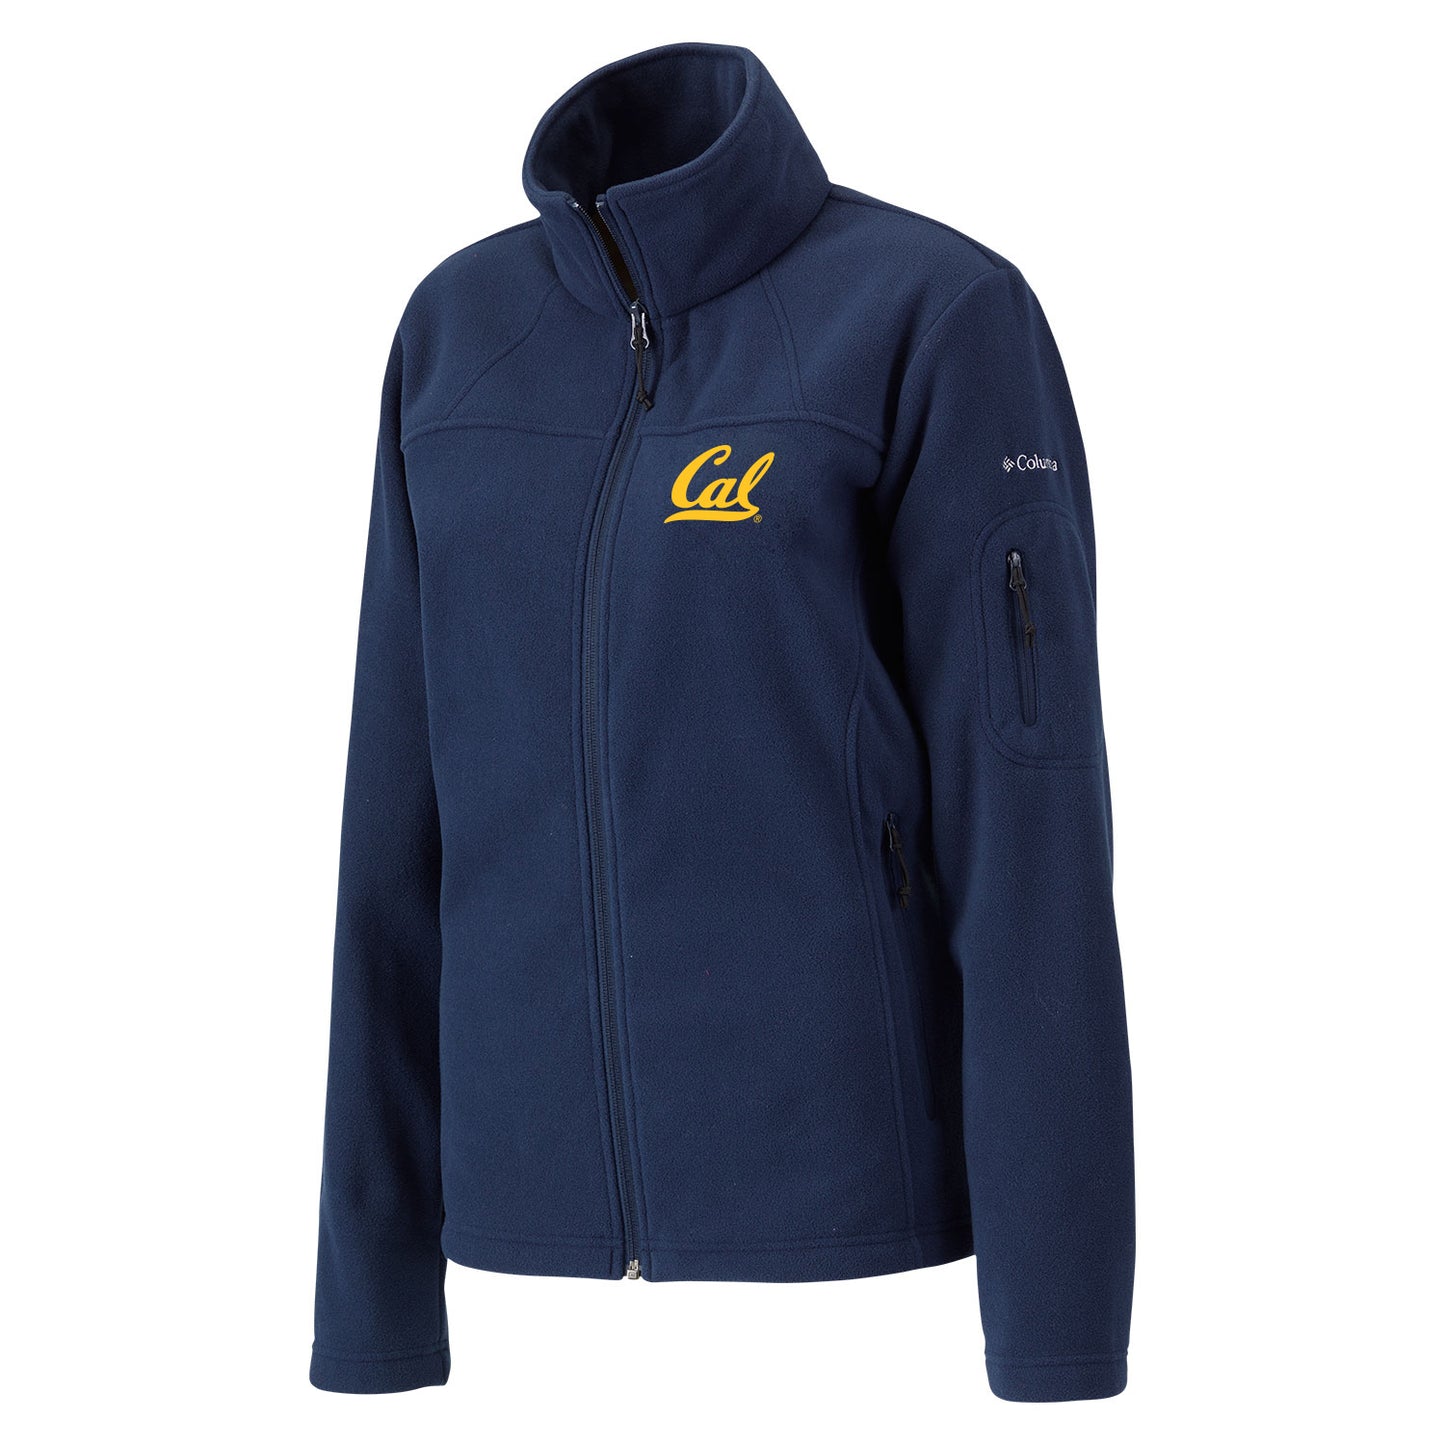 UC Berkeley Cal Embroidered Women's Columbia Polar Fleece Jacket- Ivory-Shop College Wear